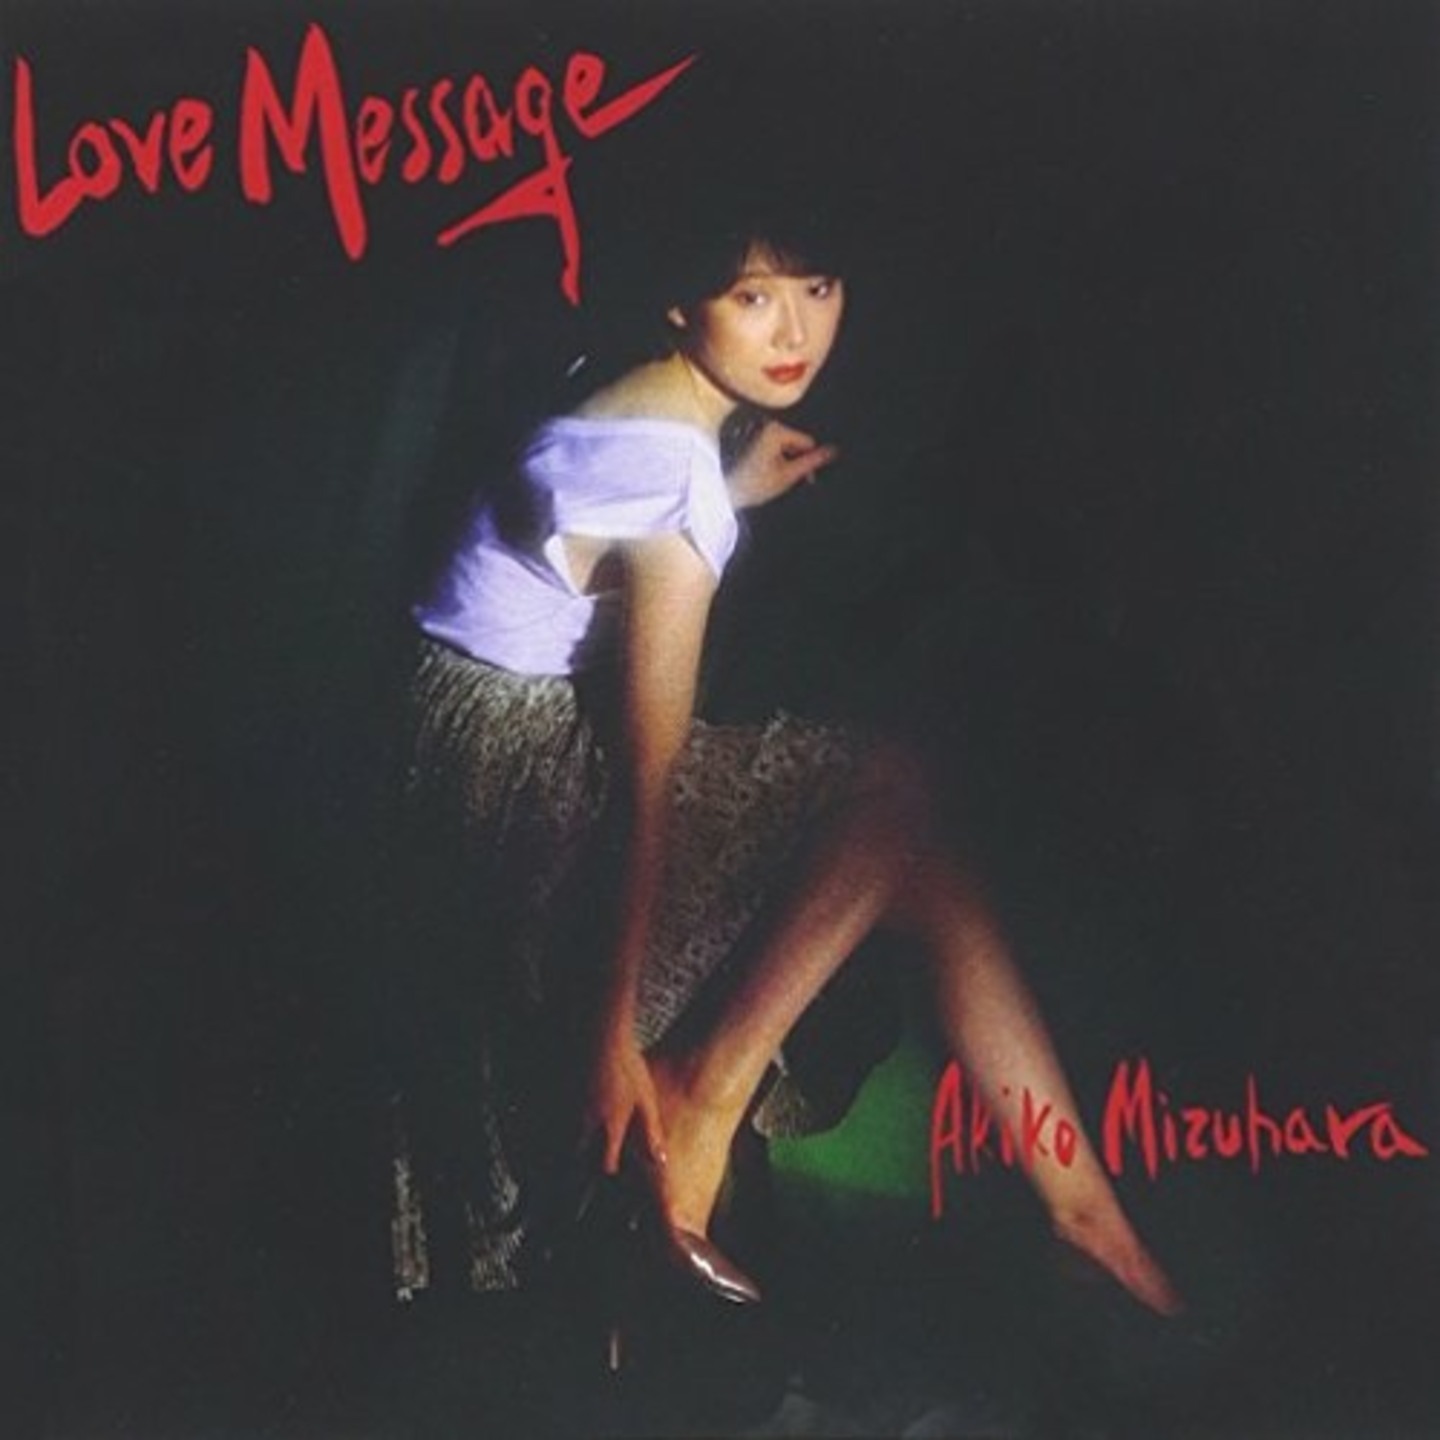 AKIKO MIZUHARA - Love Message LP